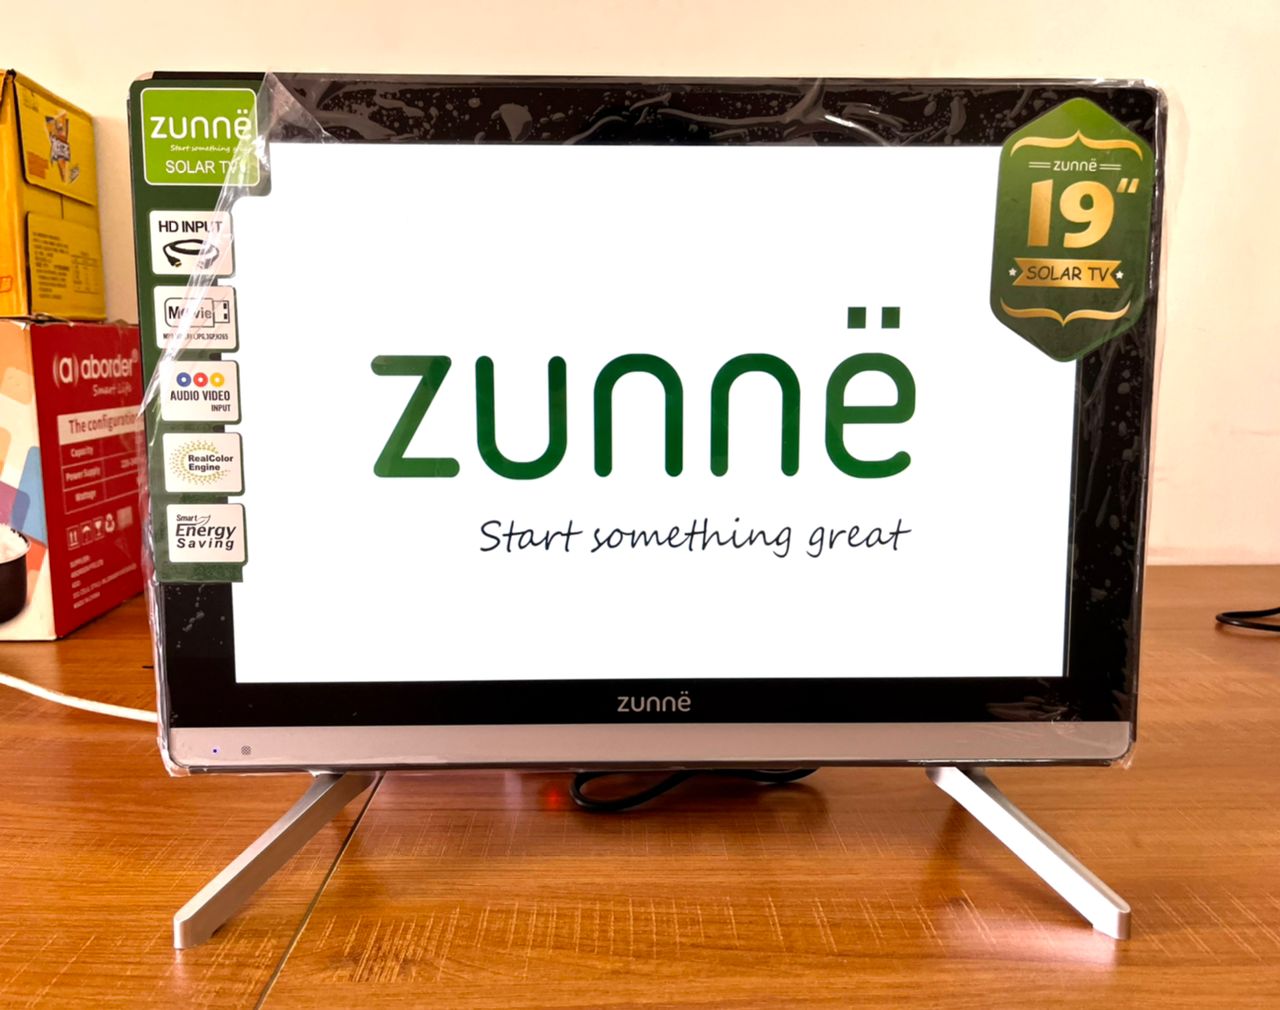 Zunne 19 (Zunne Inch 19)  Zunne Solar Tv Zh 1902